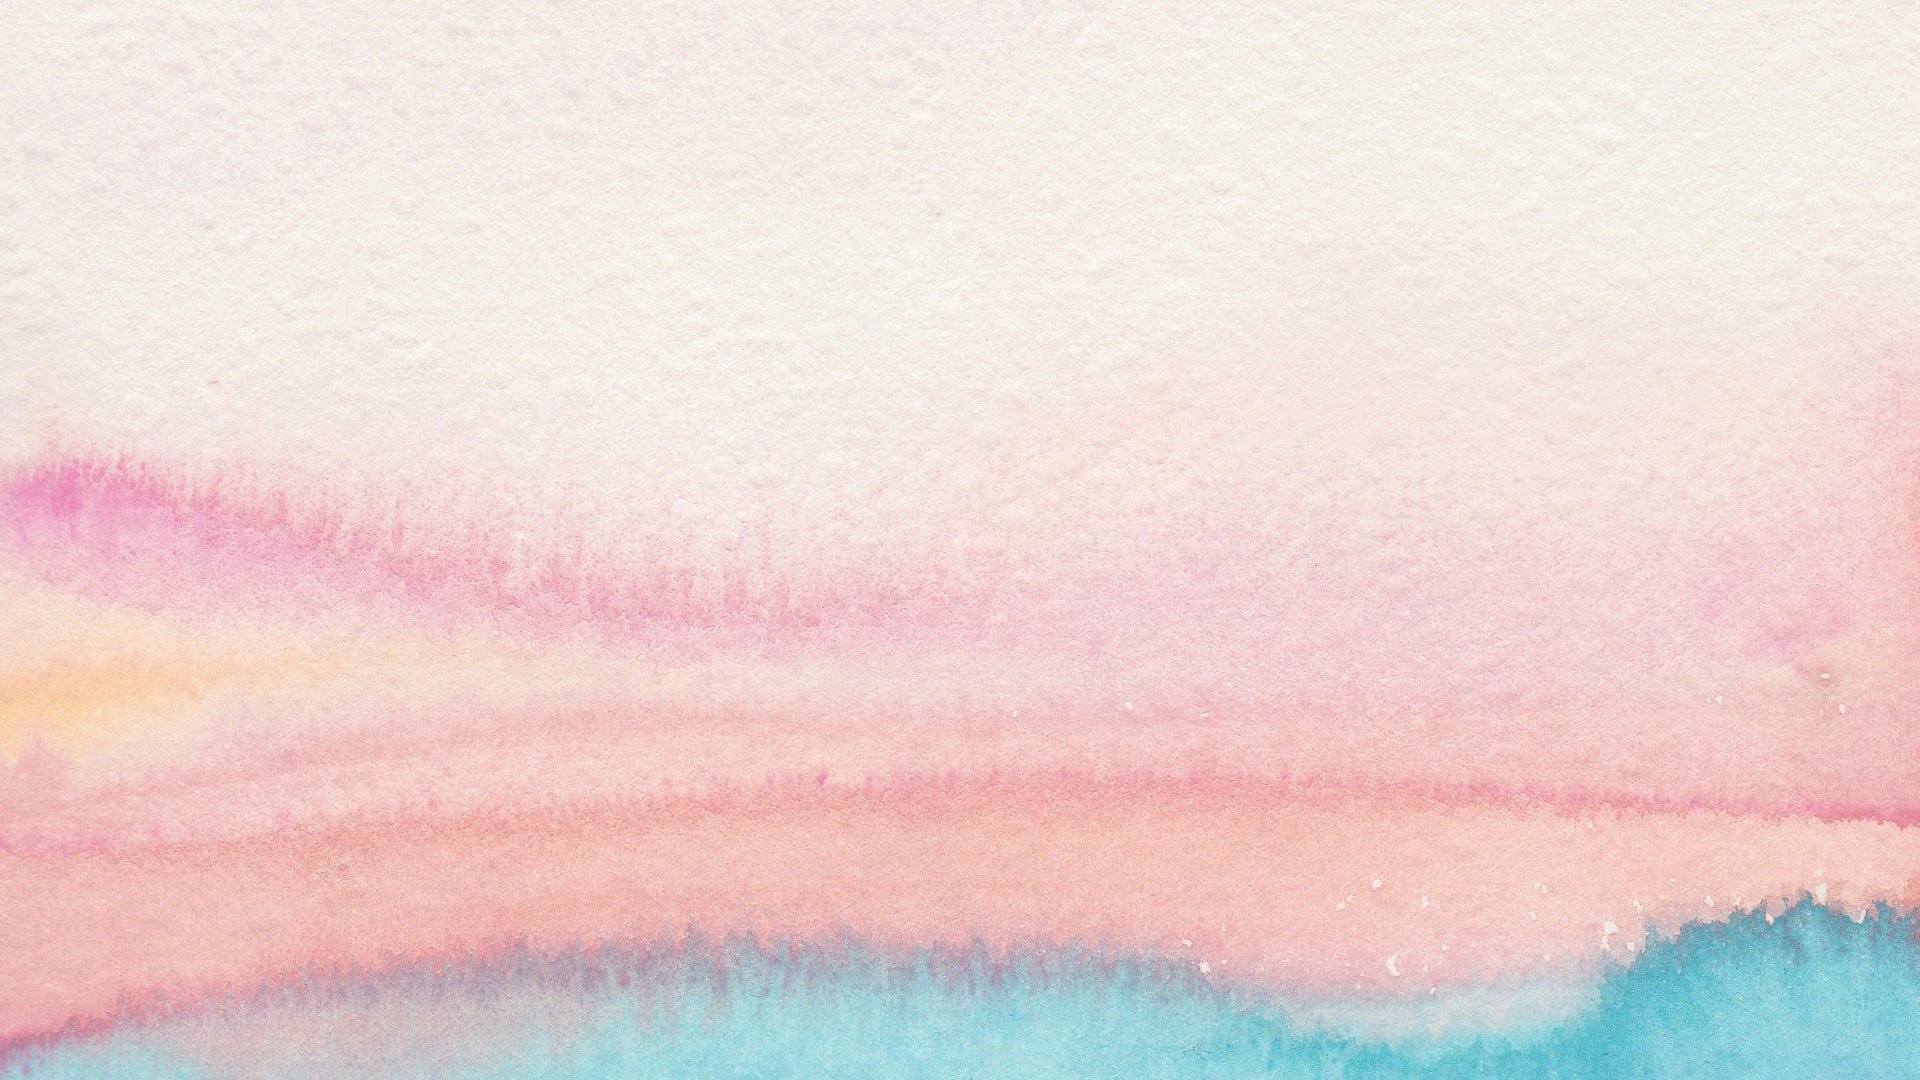 Pastel Aesthetic Wallpaper Free Download